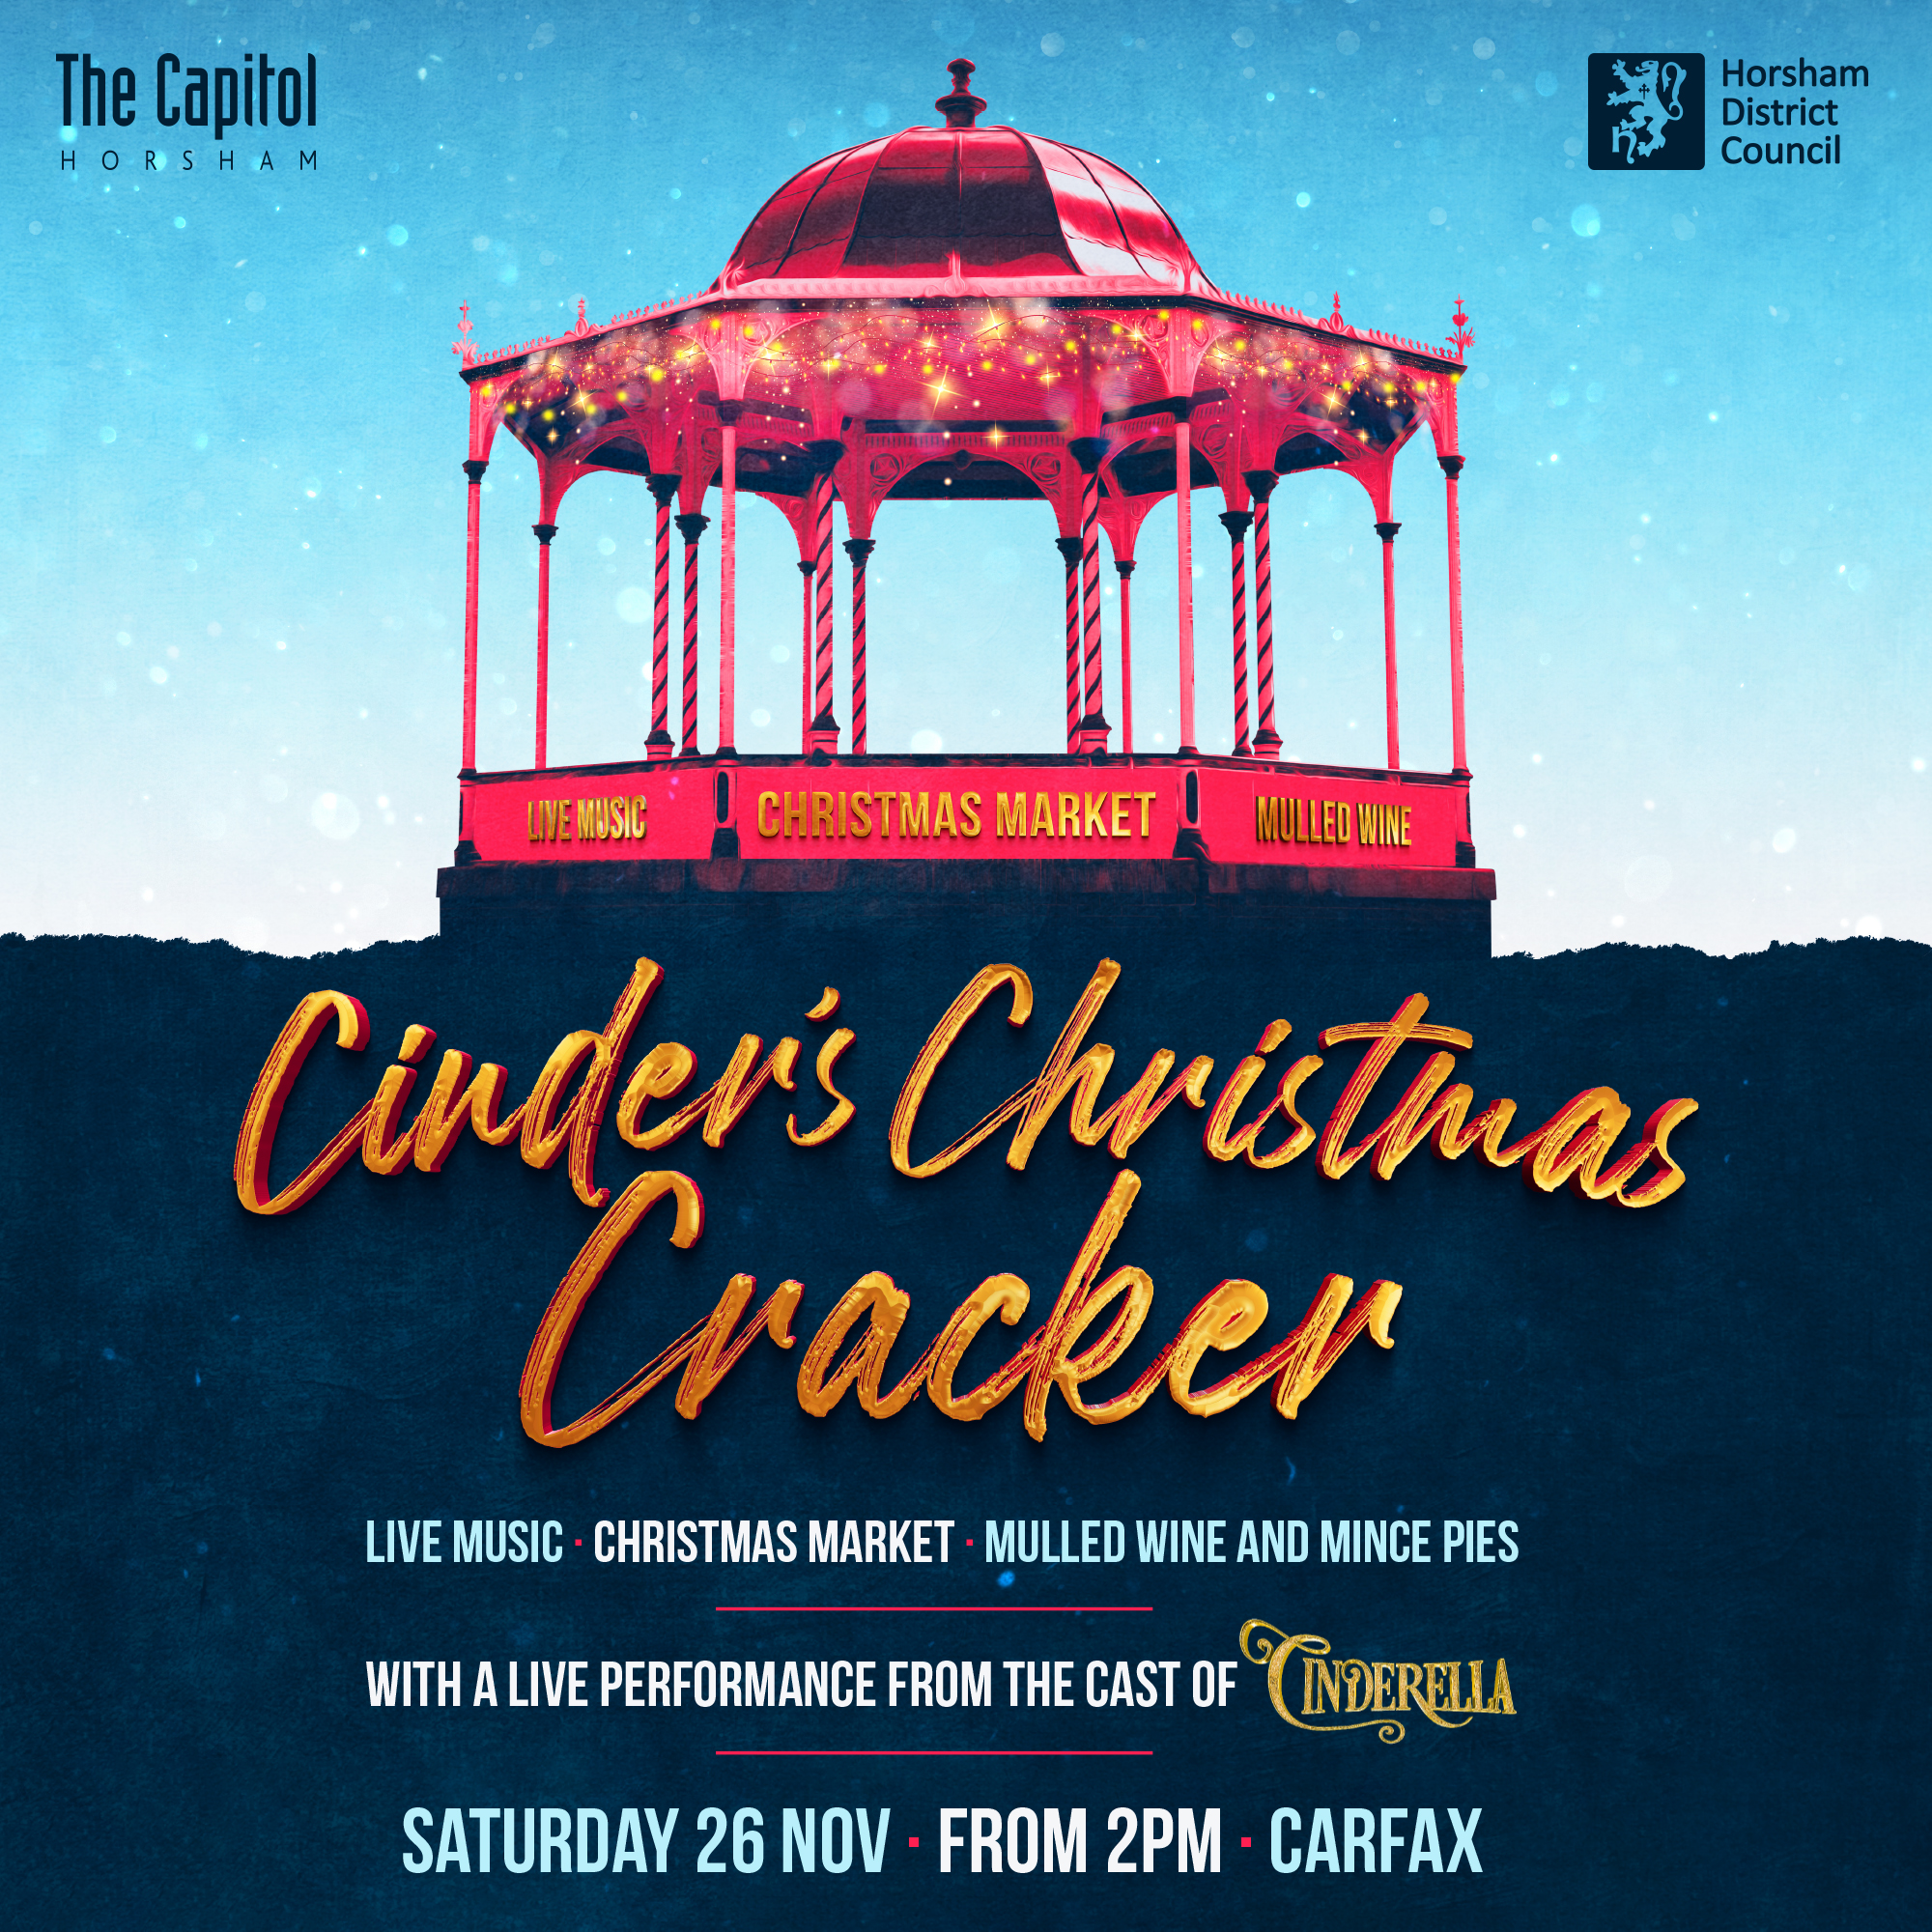 Cinders Christmas Cracker event